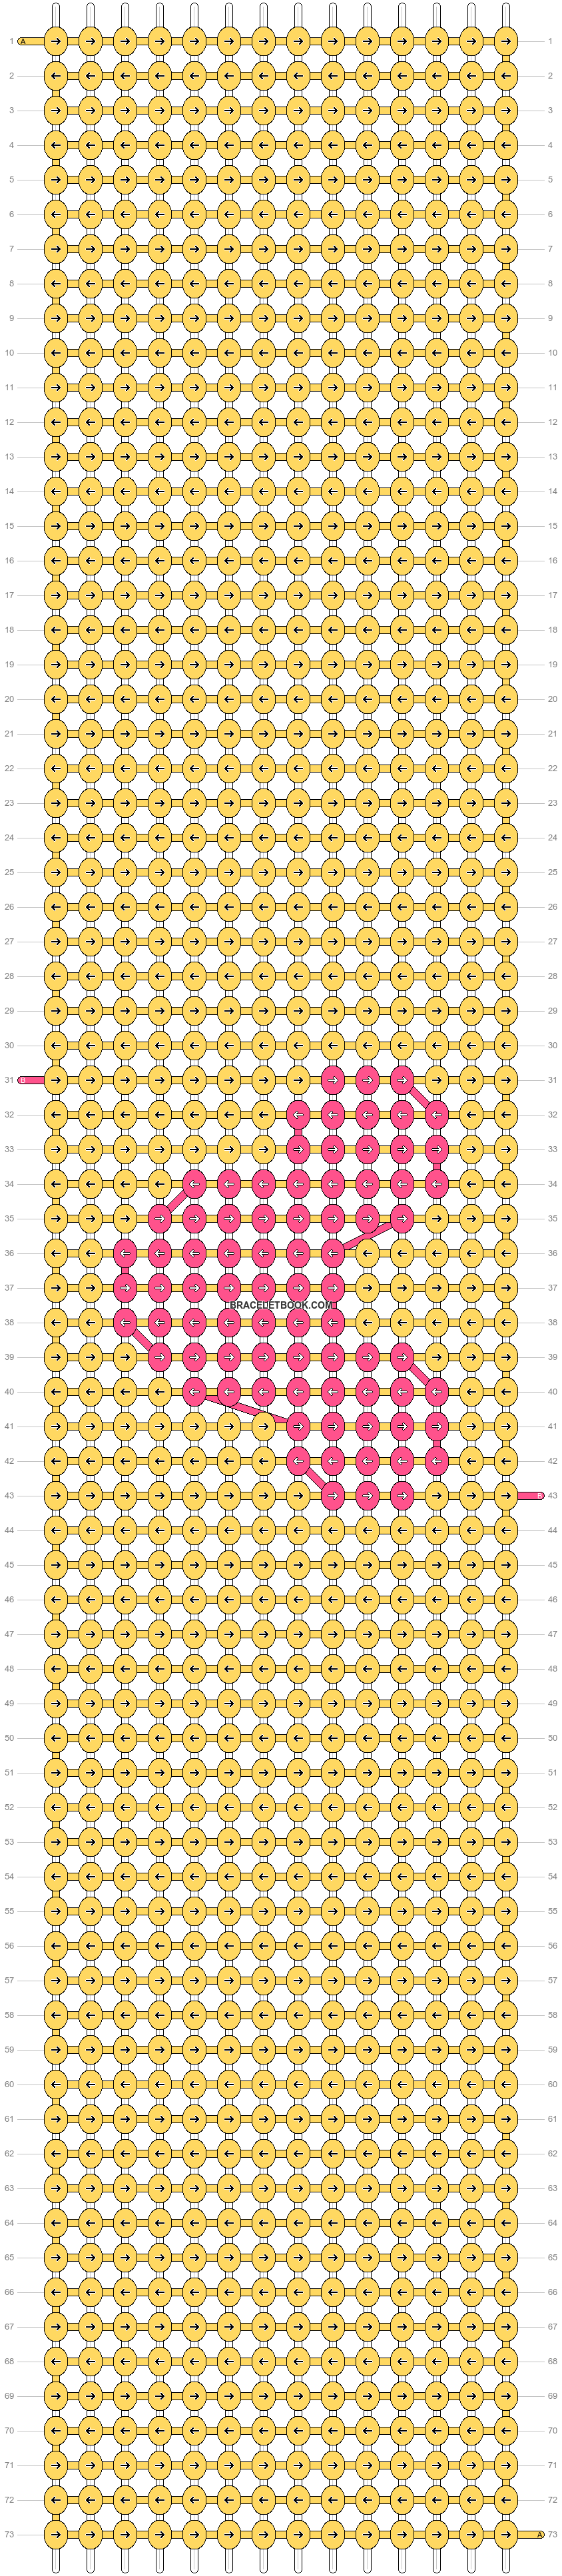 Alpha pattern #54139 variation #92566 pattern